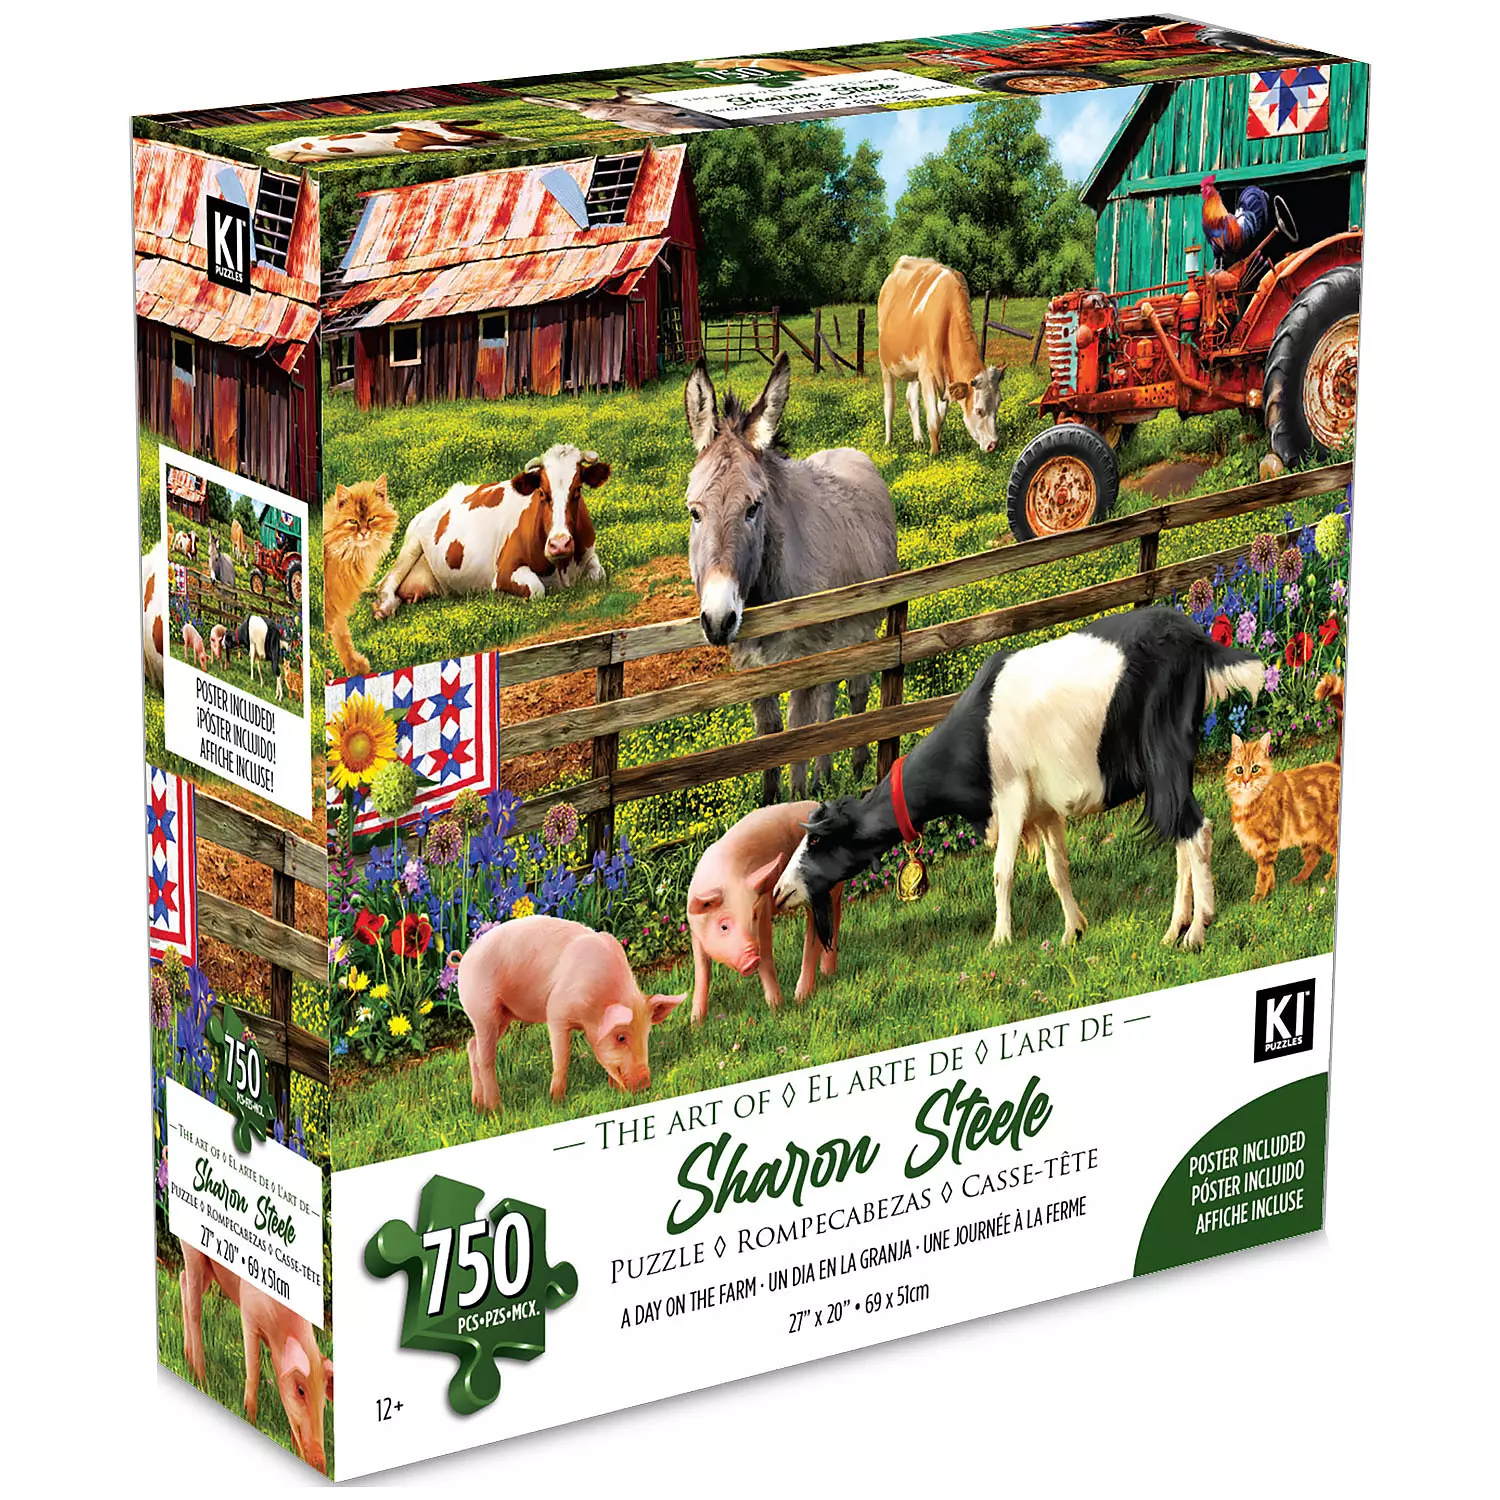 KI - Puzzle, Sharon Steele, A day on the farm, 750 pcs